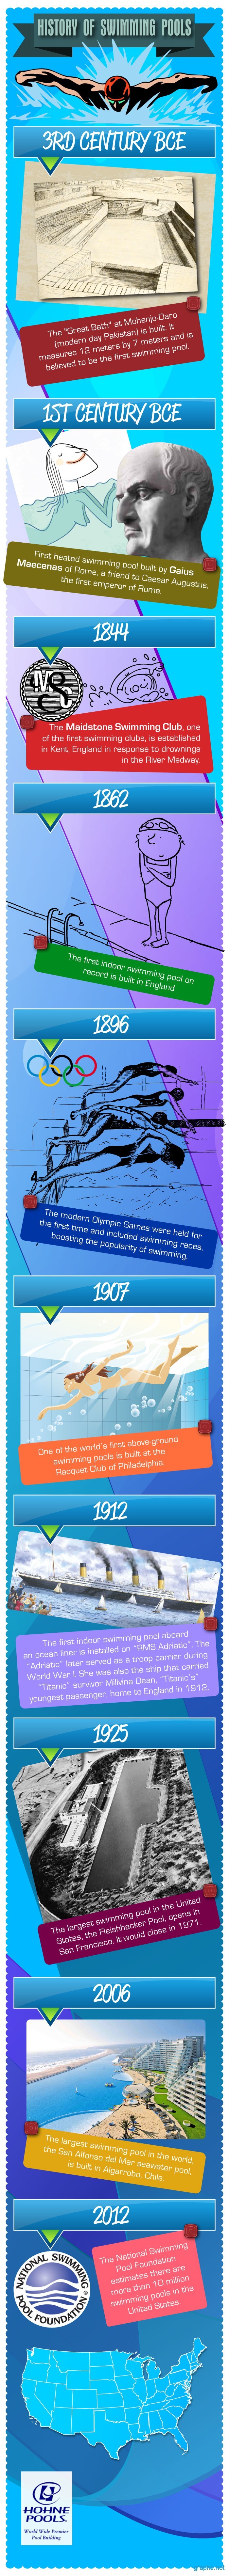 Swimming Pools History